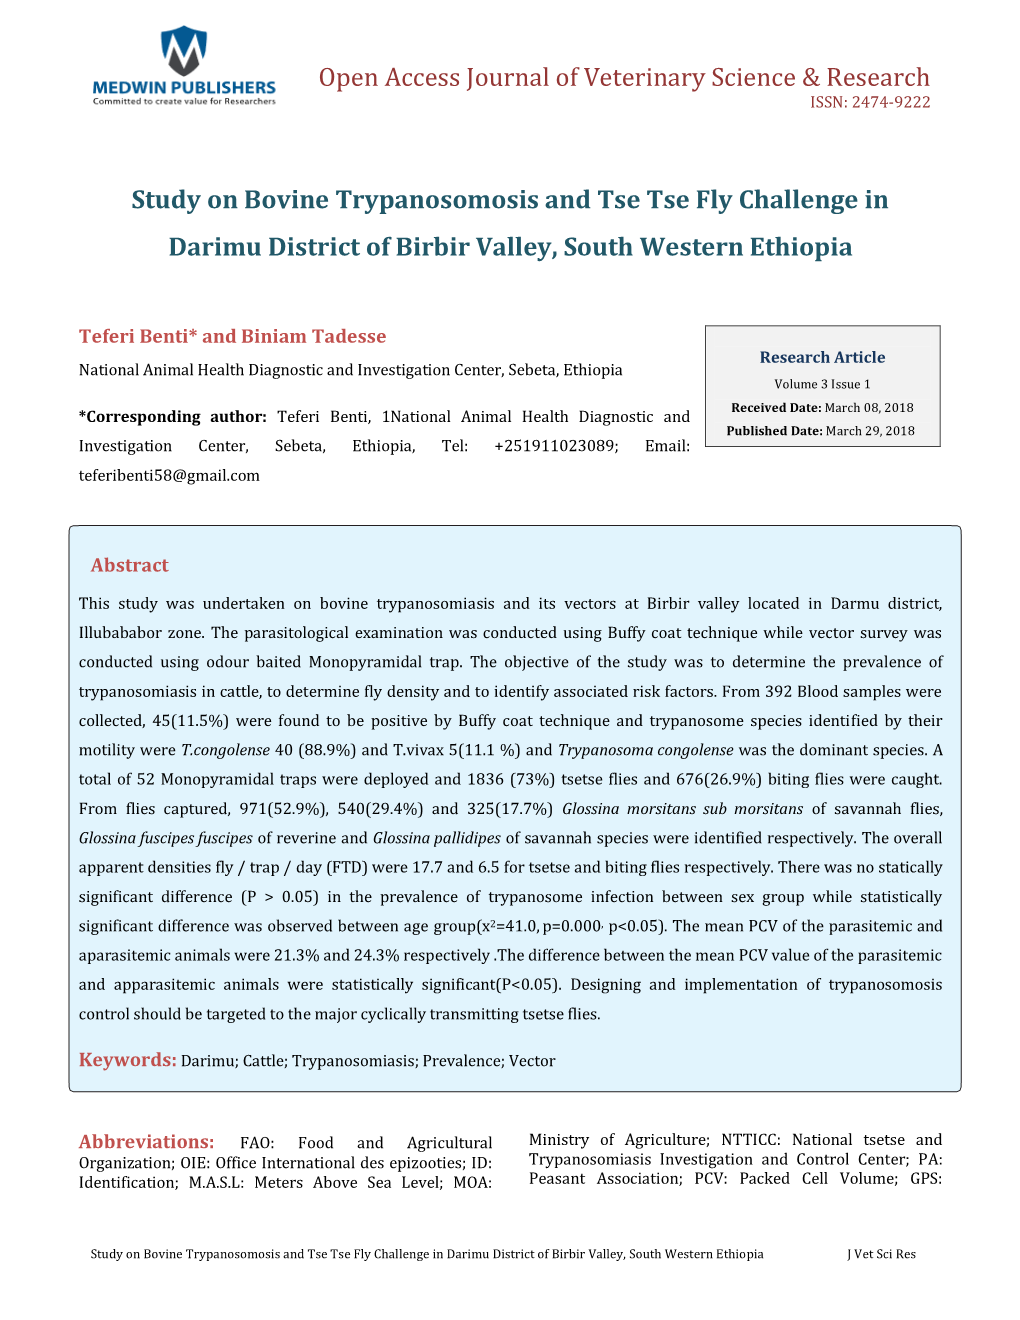 Study on Bovine Trypanosomosis and Tse Tse Fly Challenge in Darimu District of Birbir Valley, South Western Ethiopia